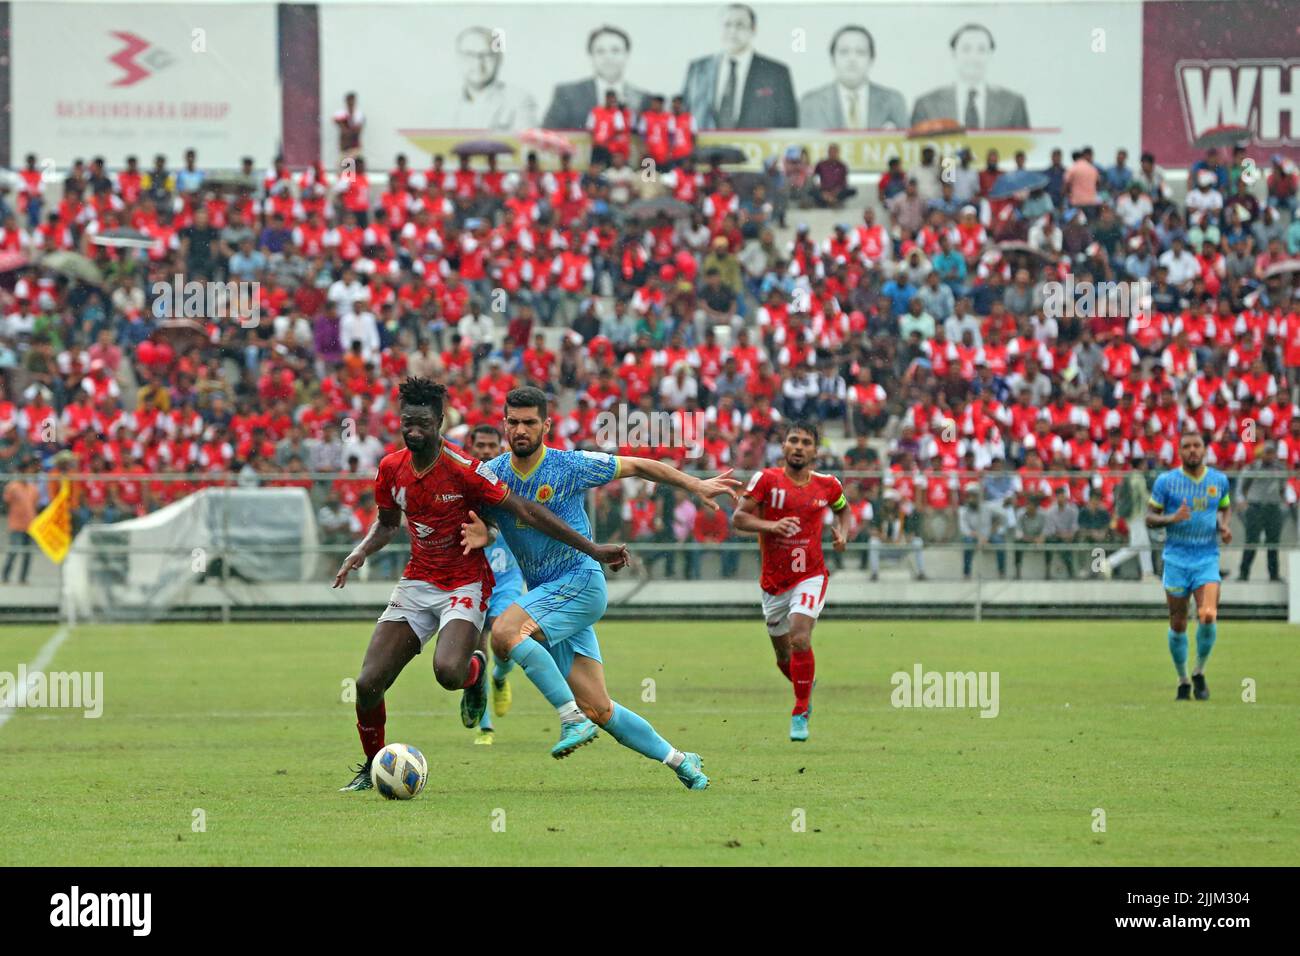 Bangladesh Premier League match between Basundhra Kings and Abahani Ltd. At the Bashundhara Kings Sports Arena, Dhaka, Bangladesh. While Basundhara Ki Stock Photo